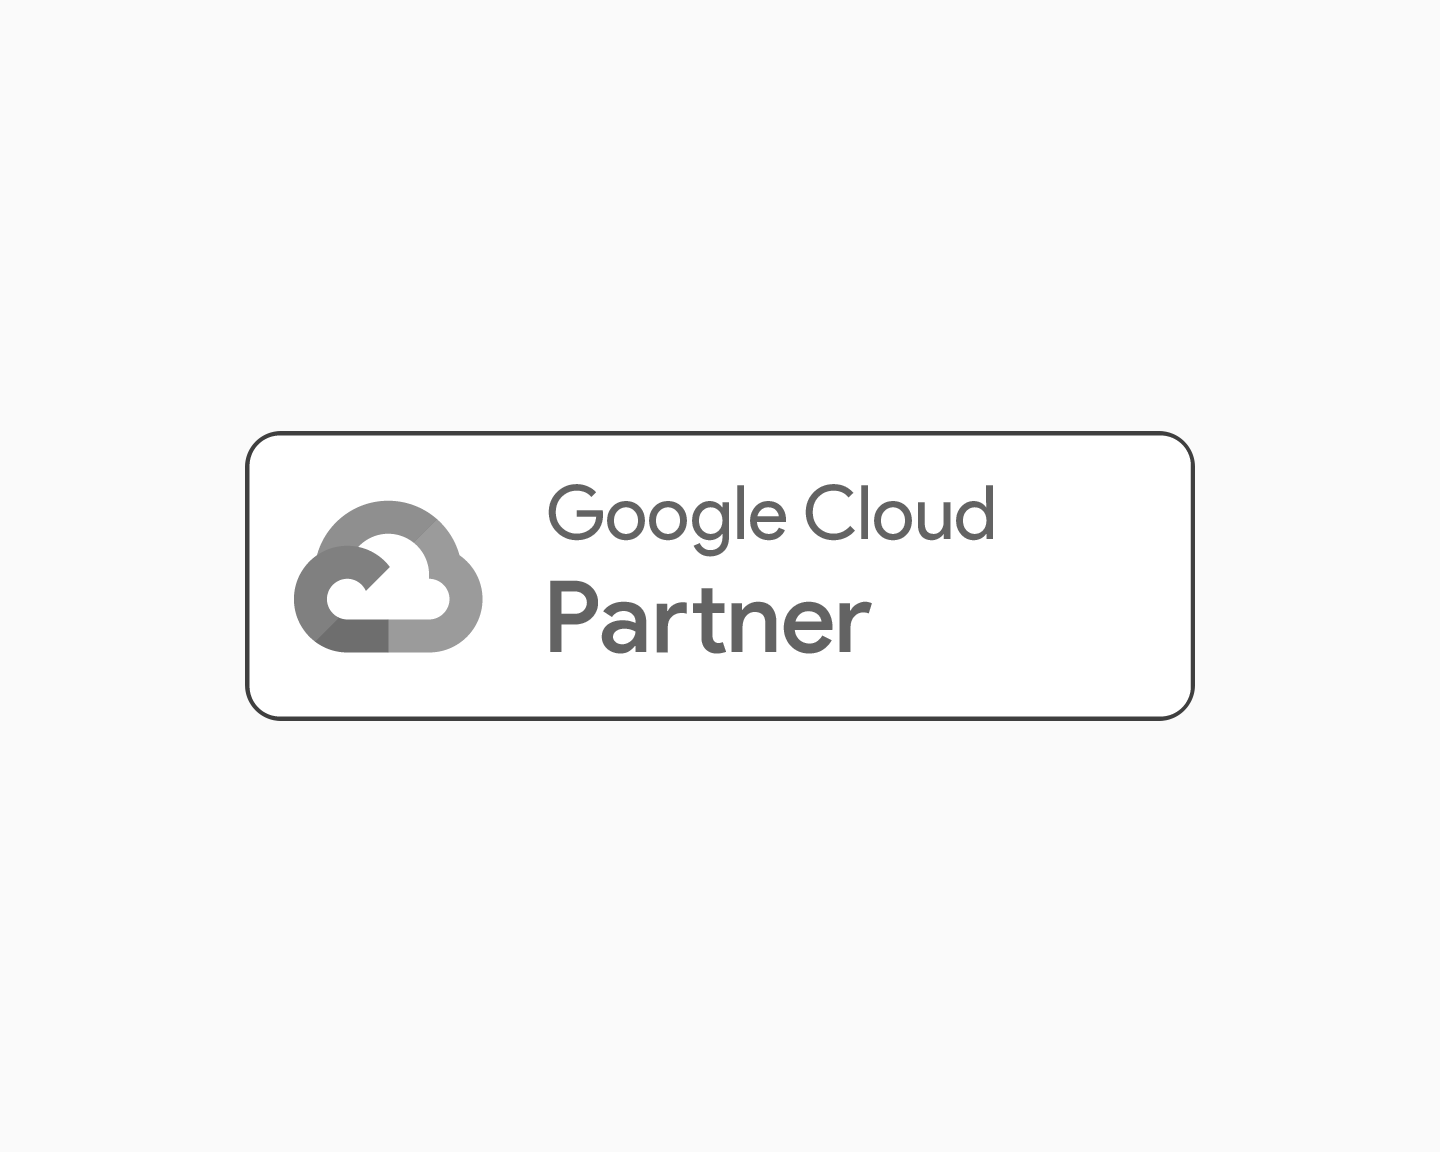 siilicom-partner_logo-google_cloud_partner-1440x1152